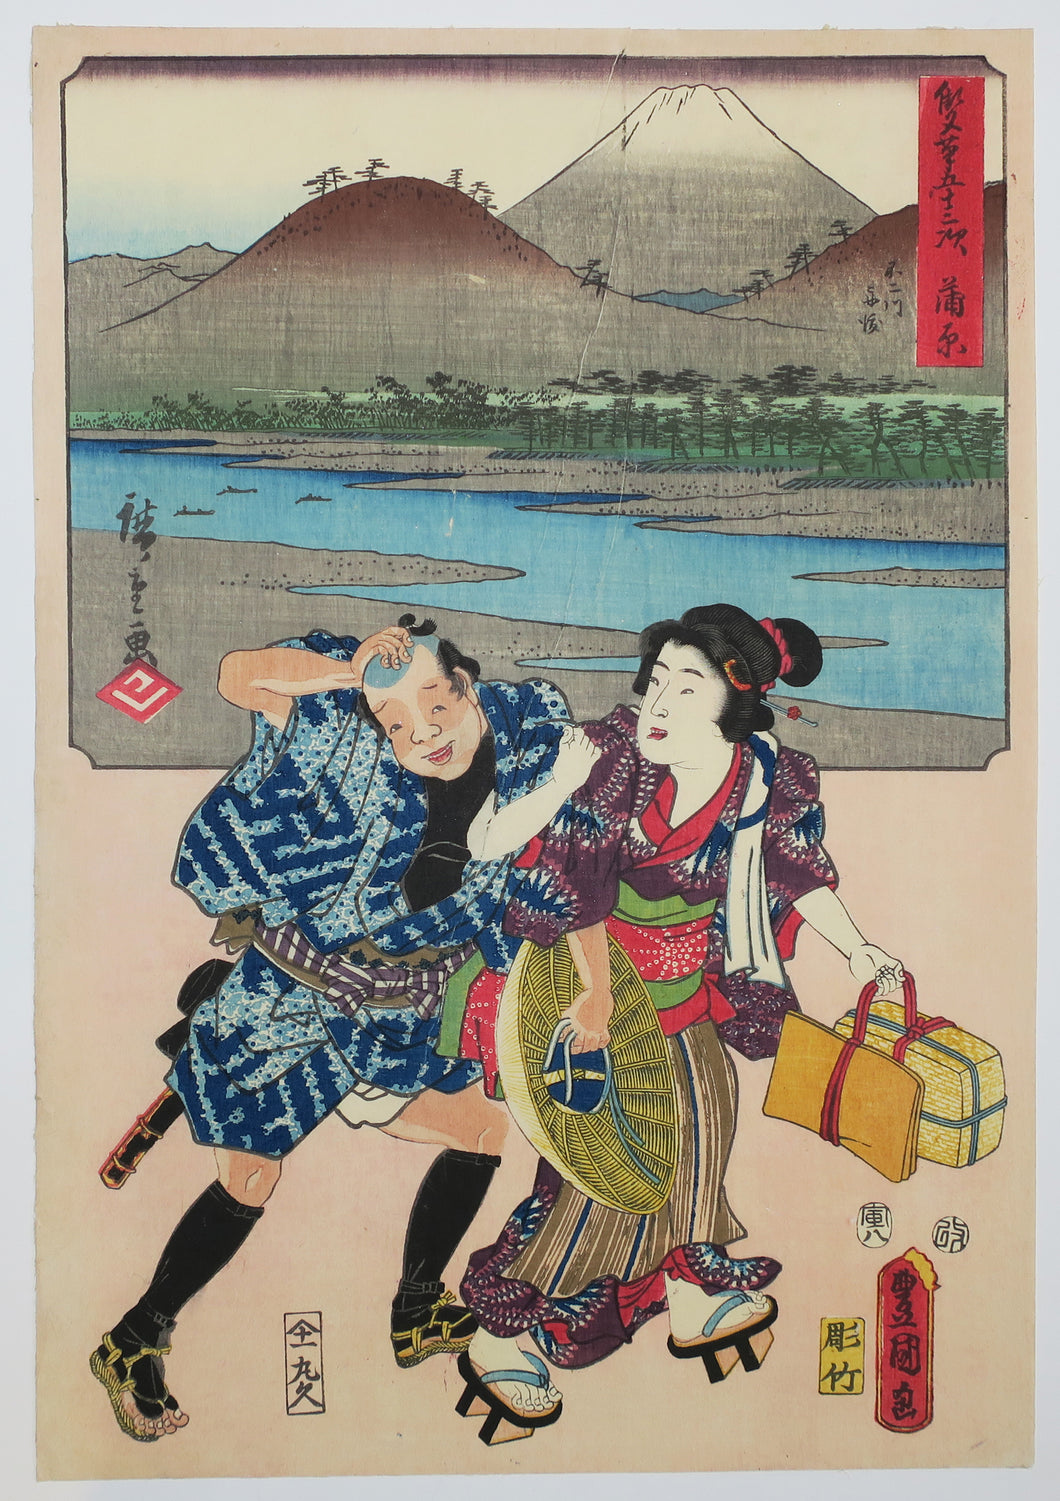 Kanbara, Ferry sur la rivière Fuji (Fujikawa funawatari) & Attirer des clients pour une auberge (Yadohiki).  1854-1855.